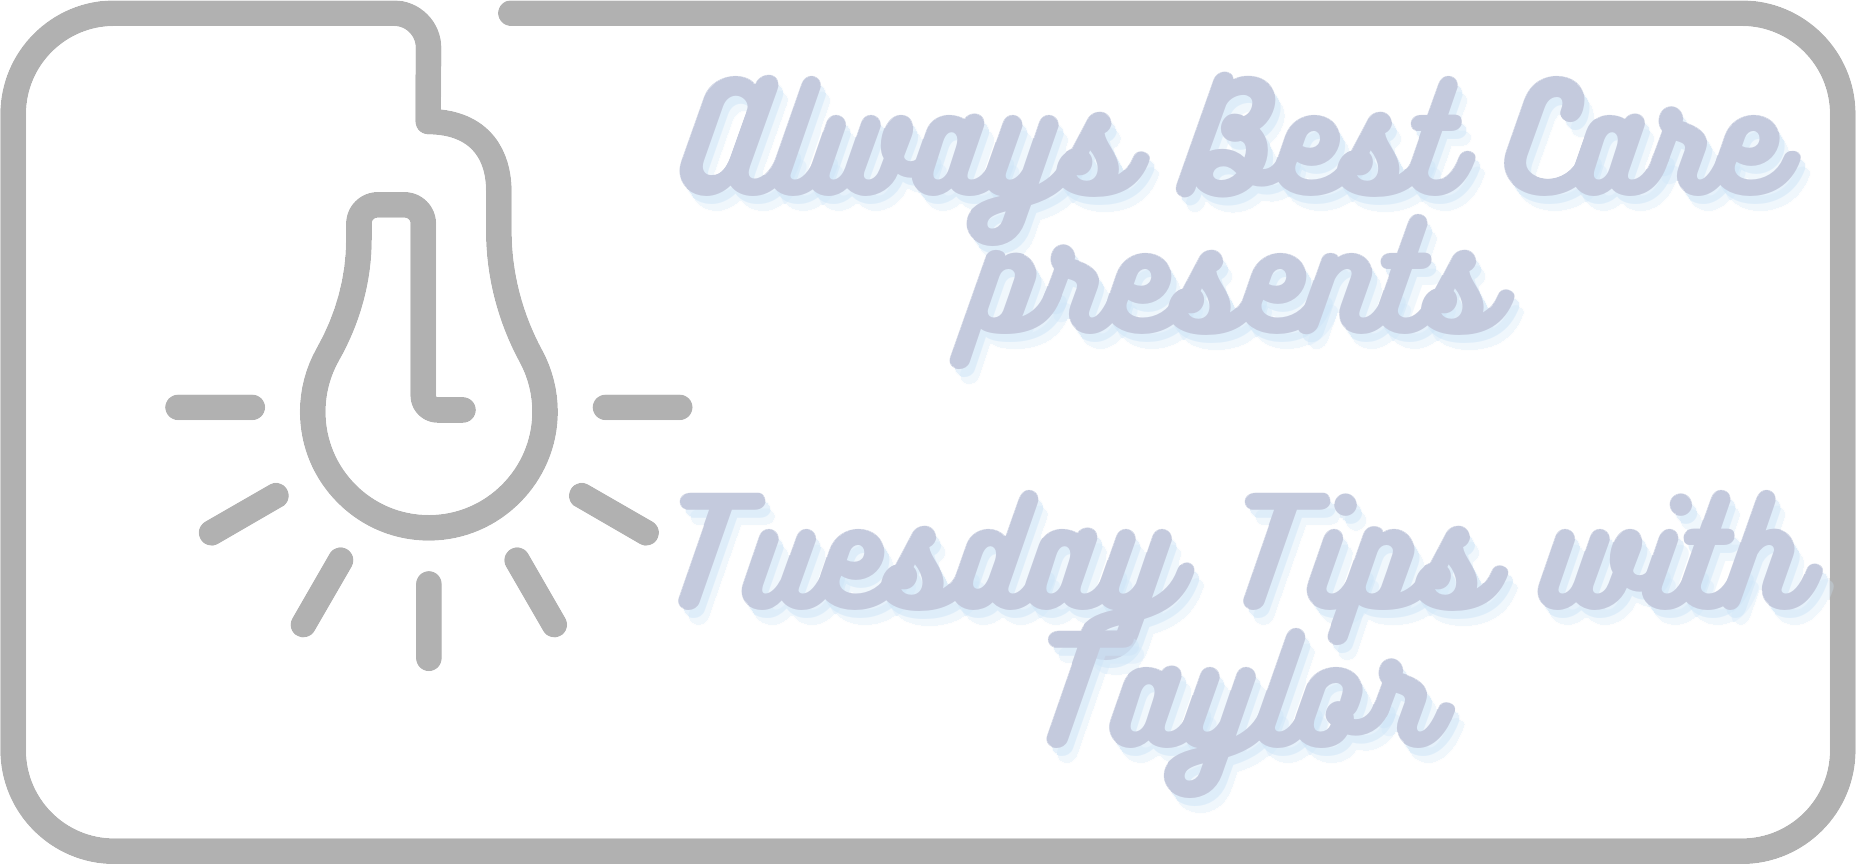 Tuesday-Tips-Thumbnail2